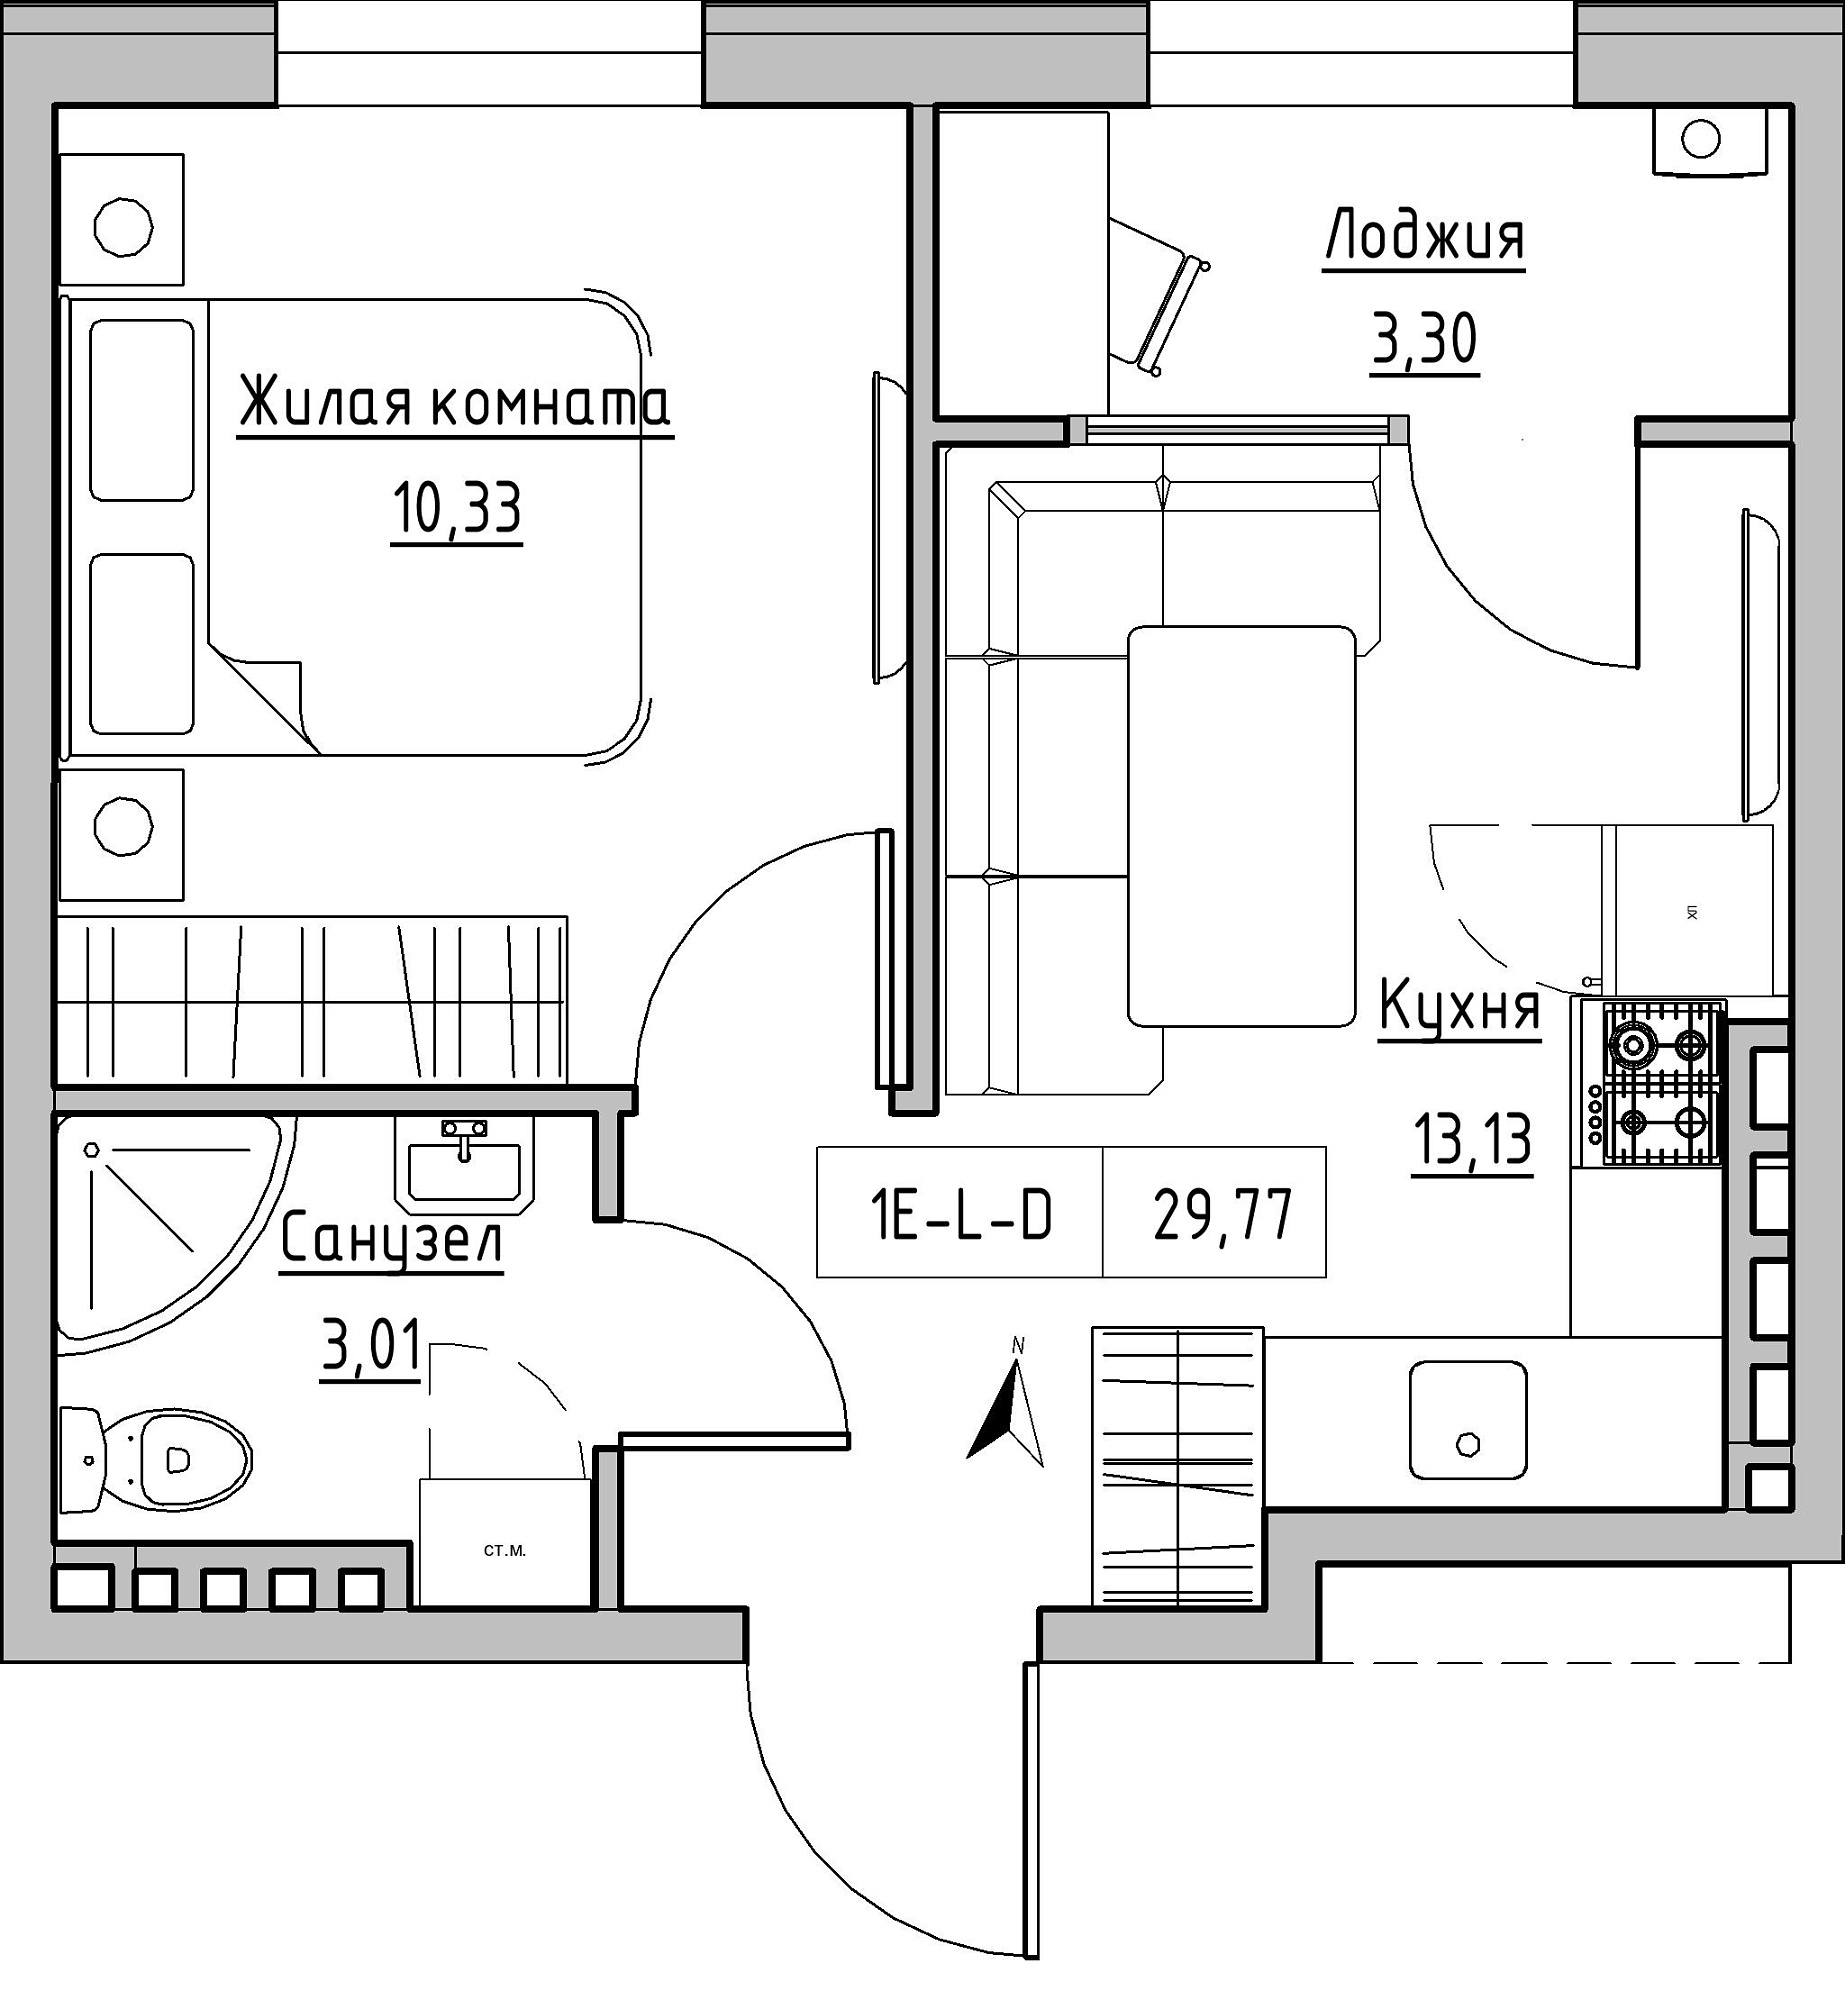 Planning 1-rm flats area 29.77m2, KS-024-04/0001.